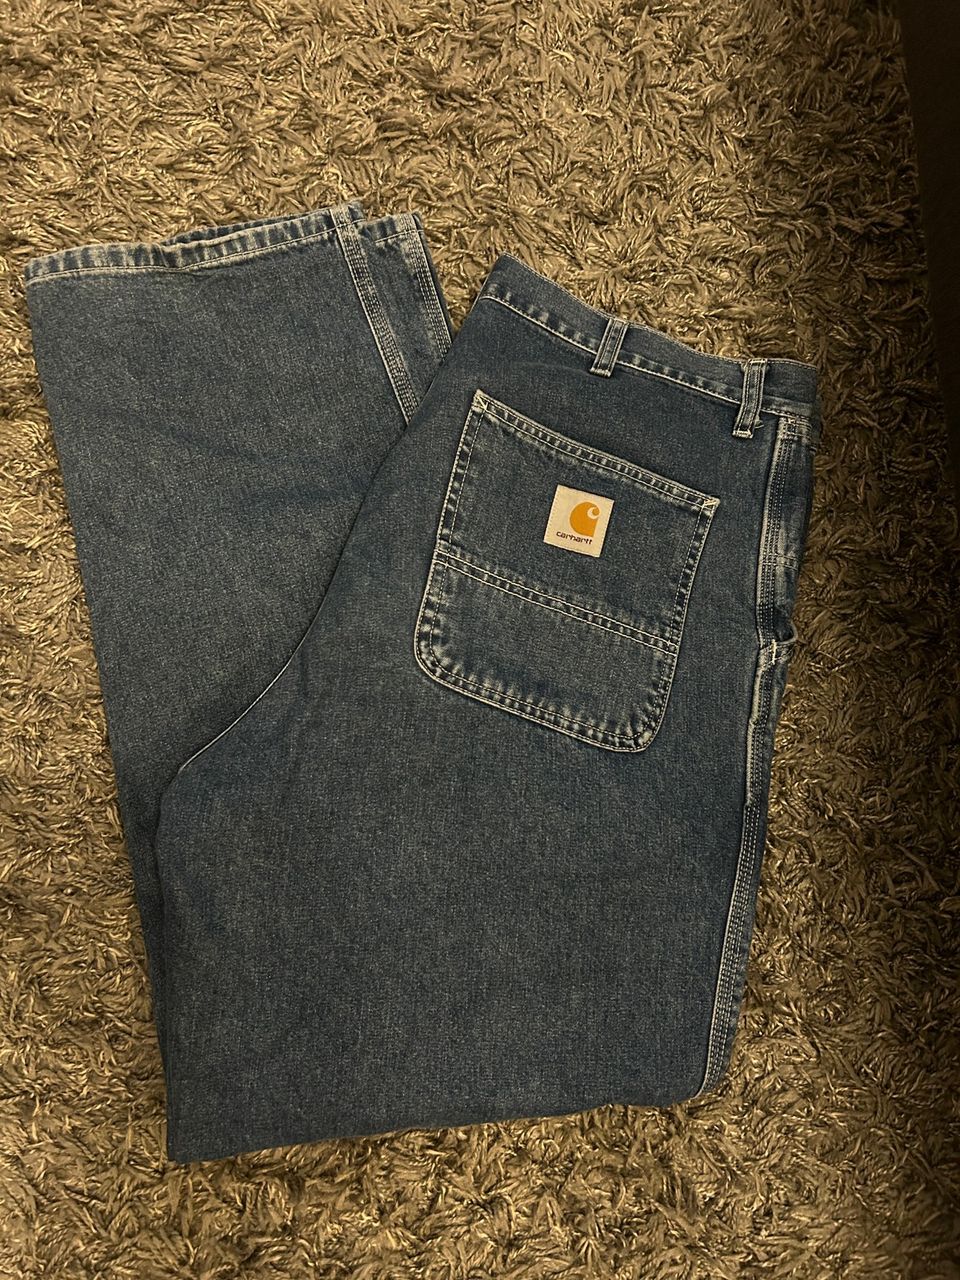 Carhartt - simple jeans